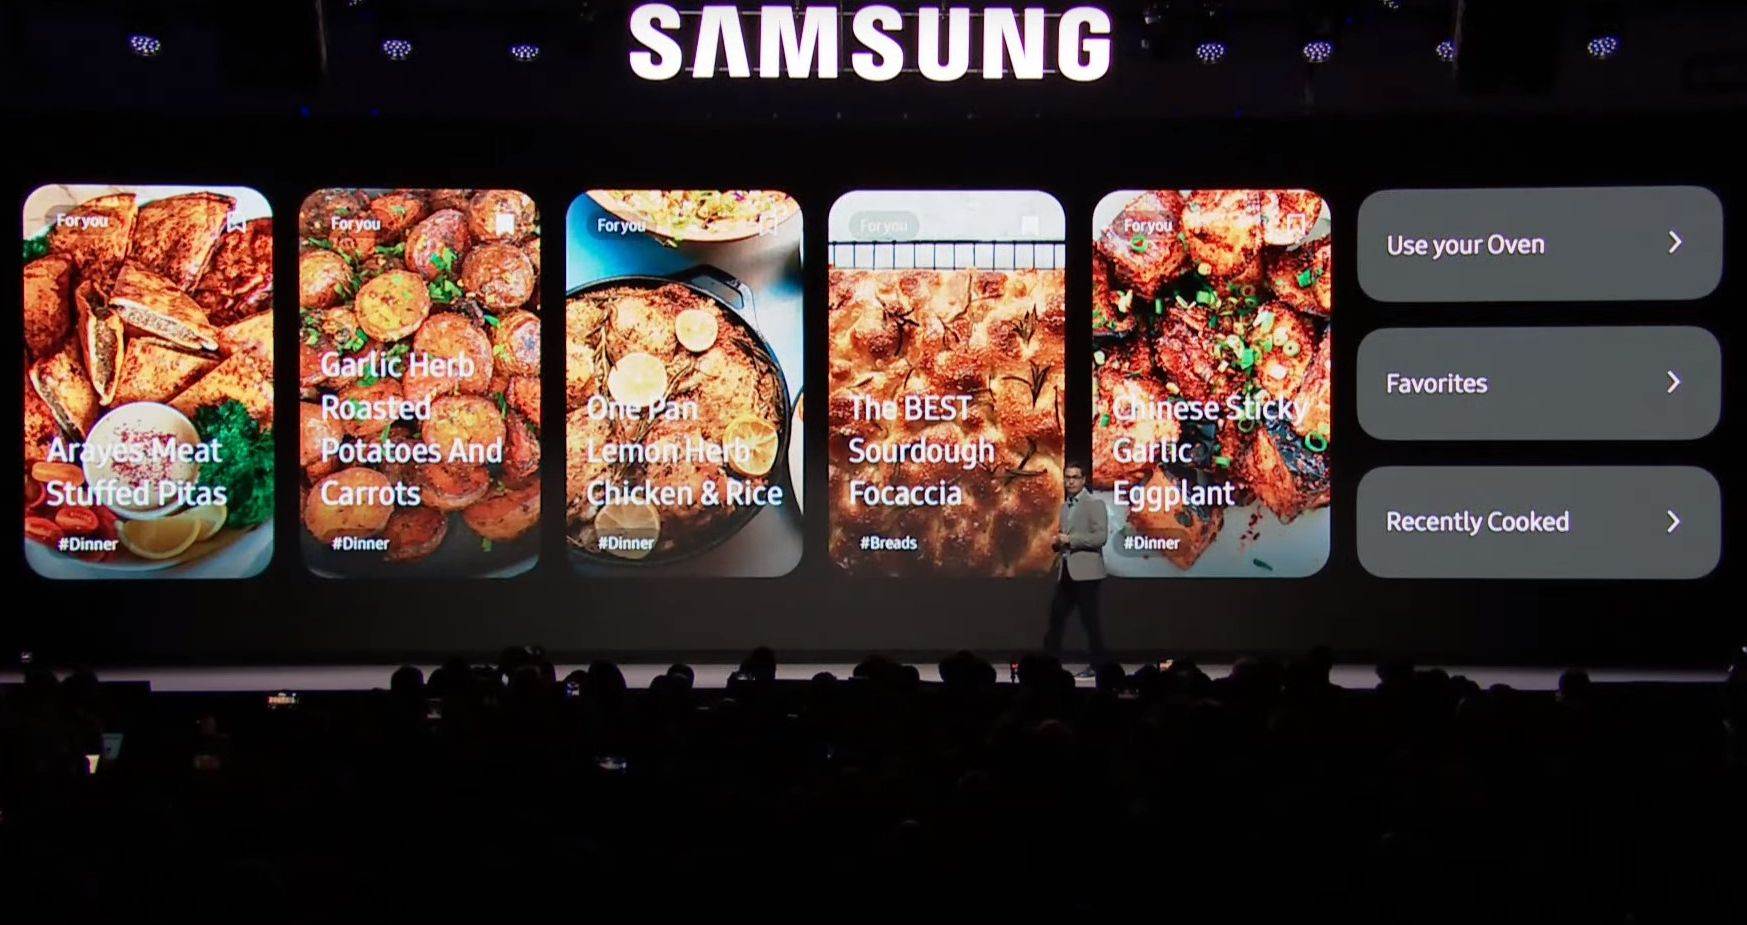  Samsung Food.jpg 